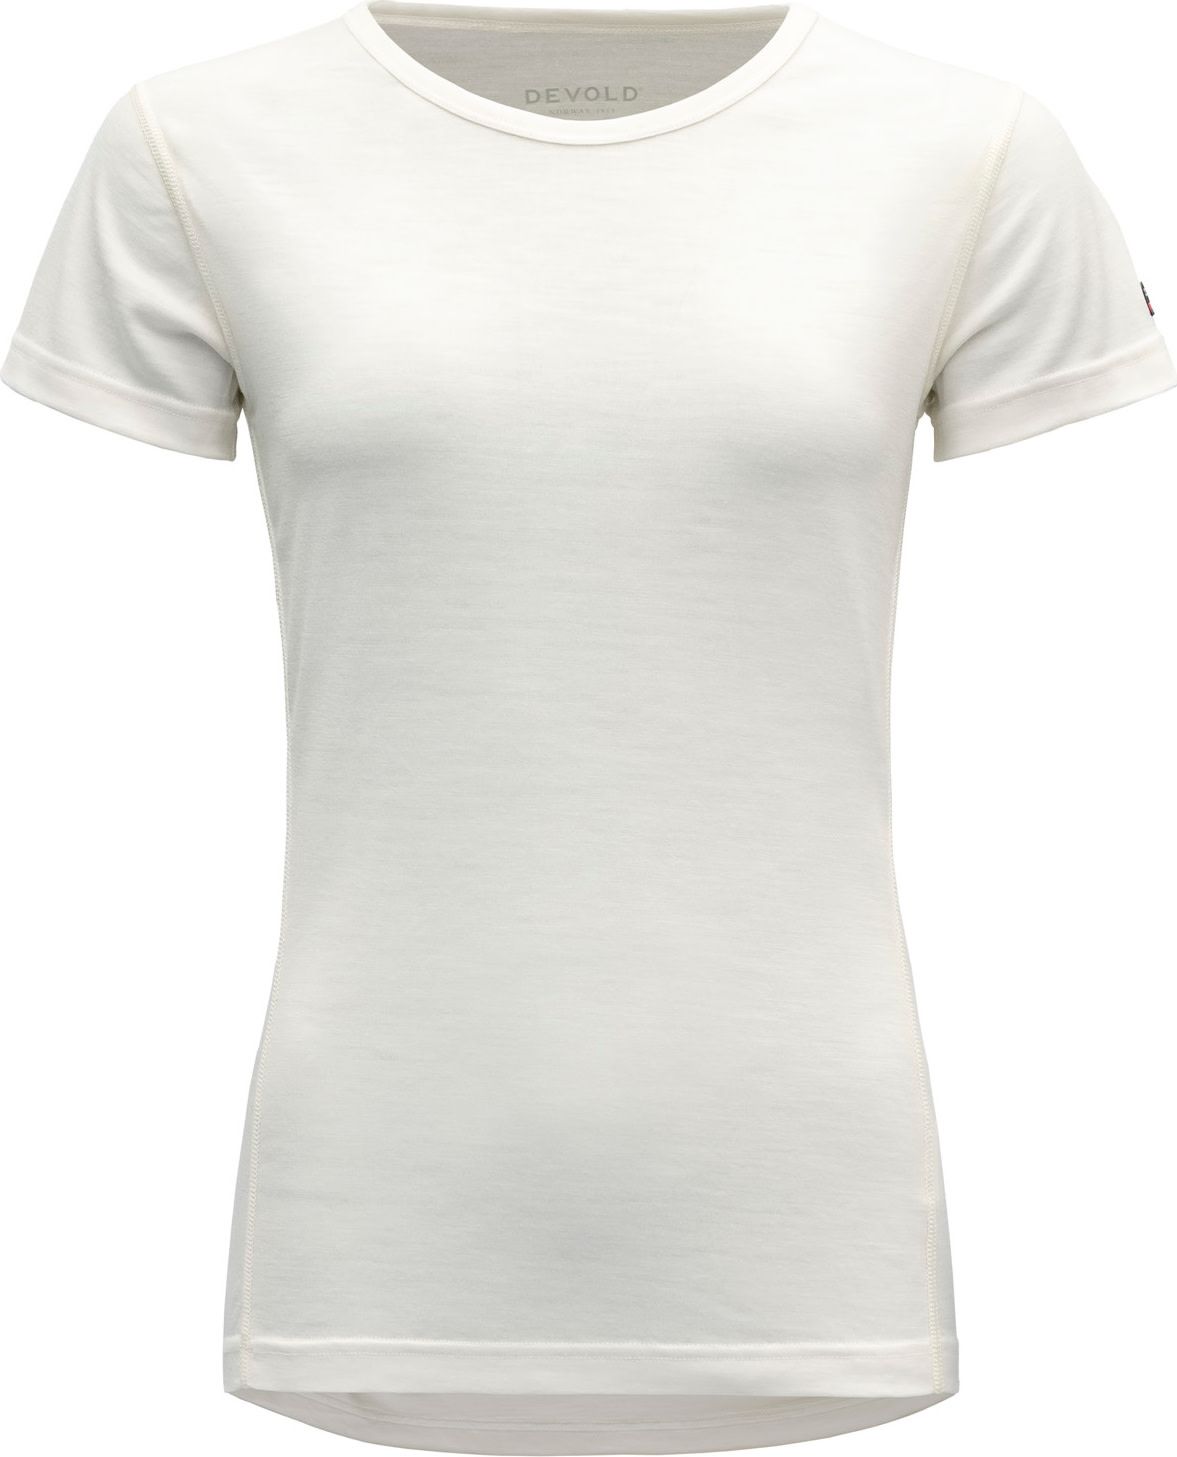 Devold Women's Breeze Merino 150 T-Shirt White